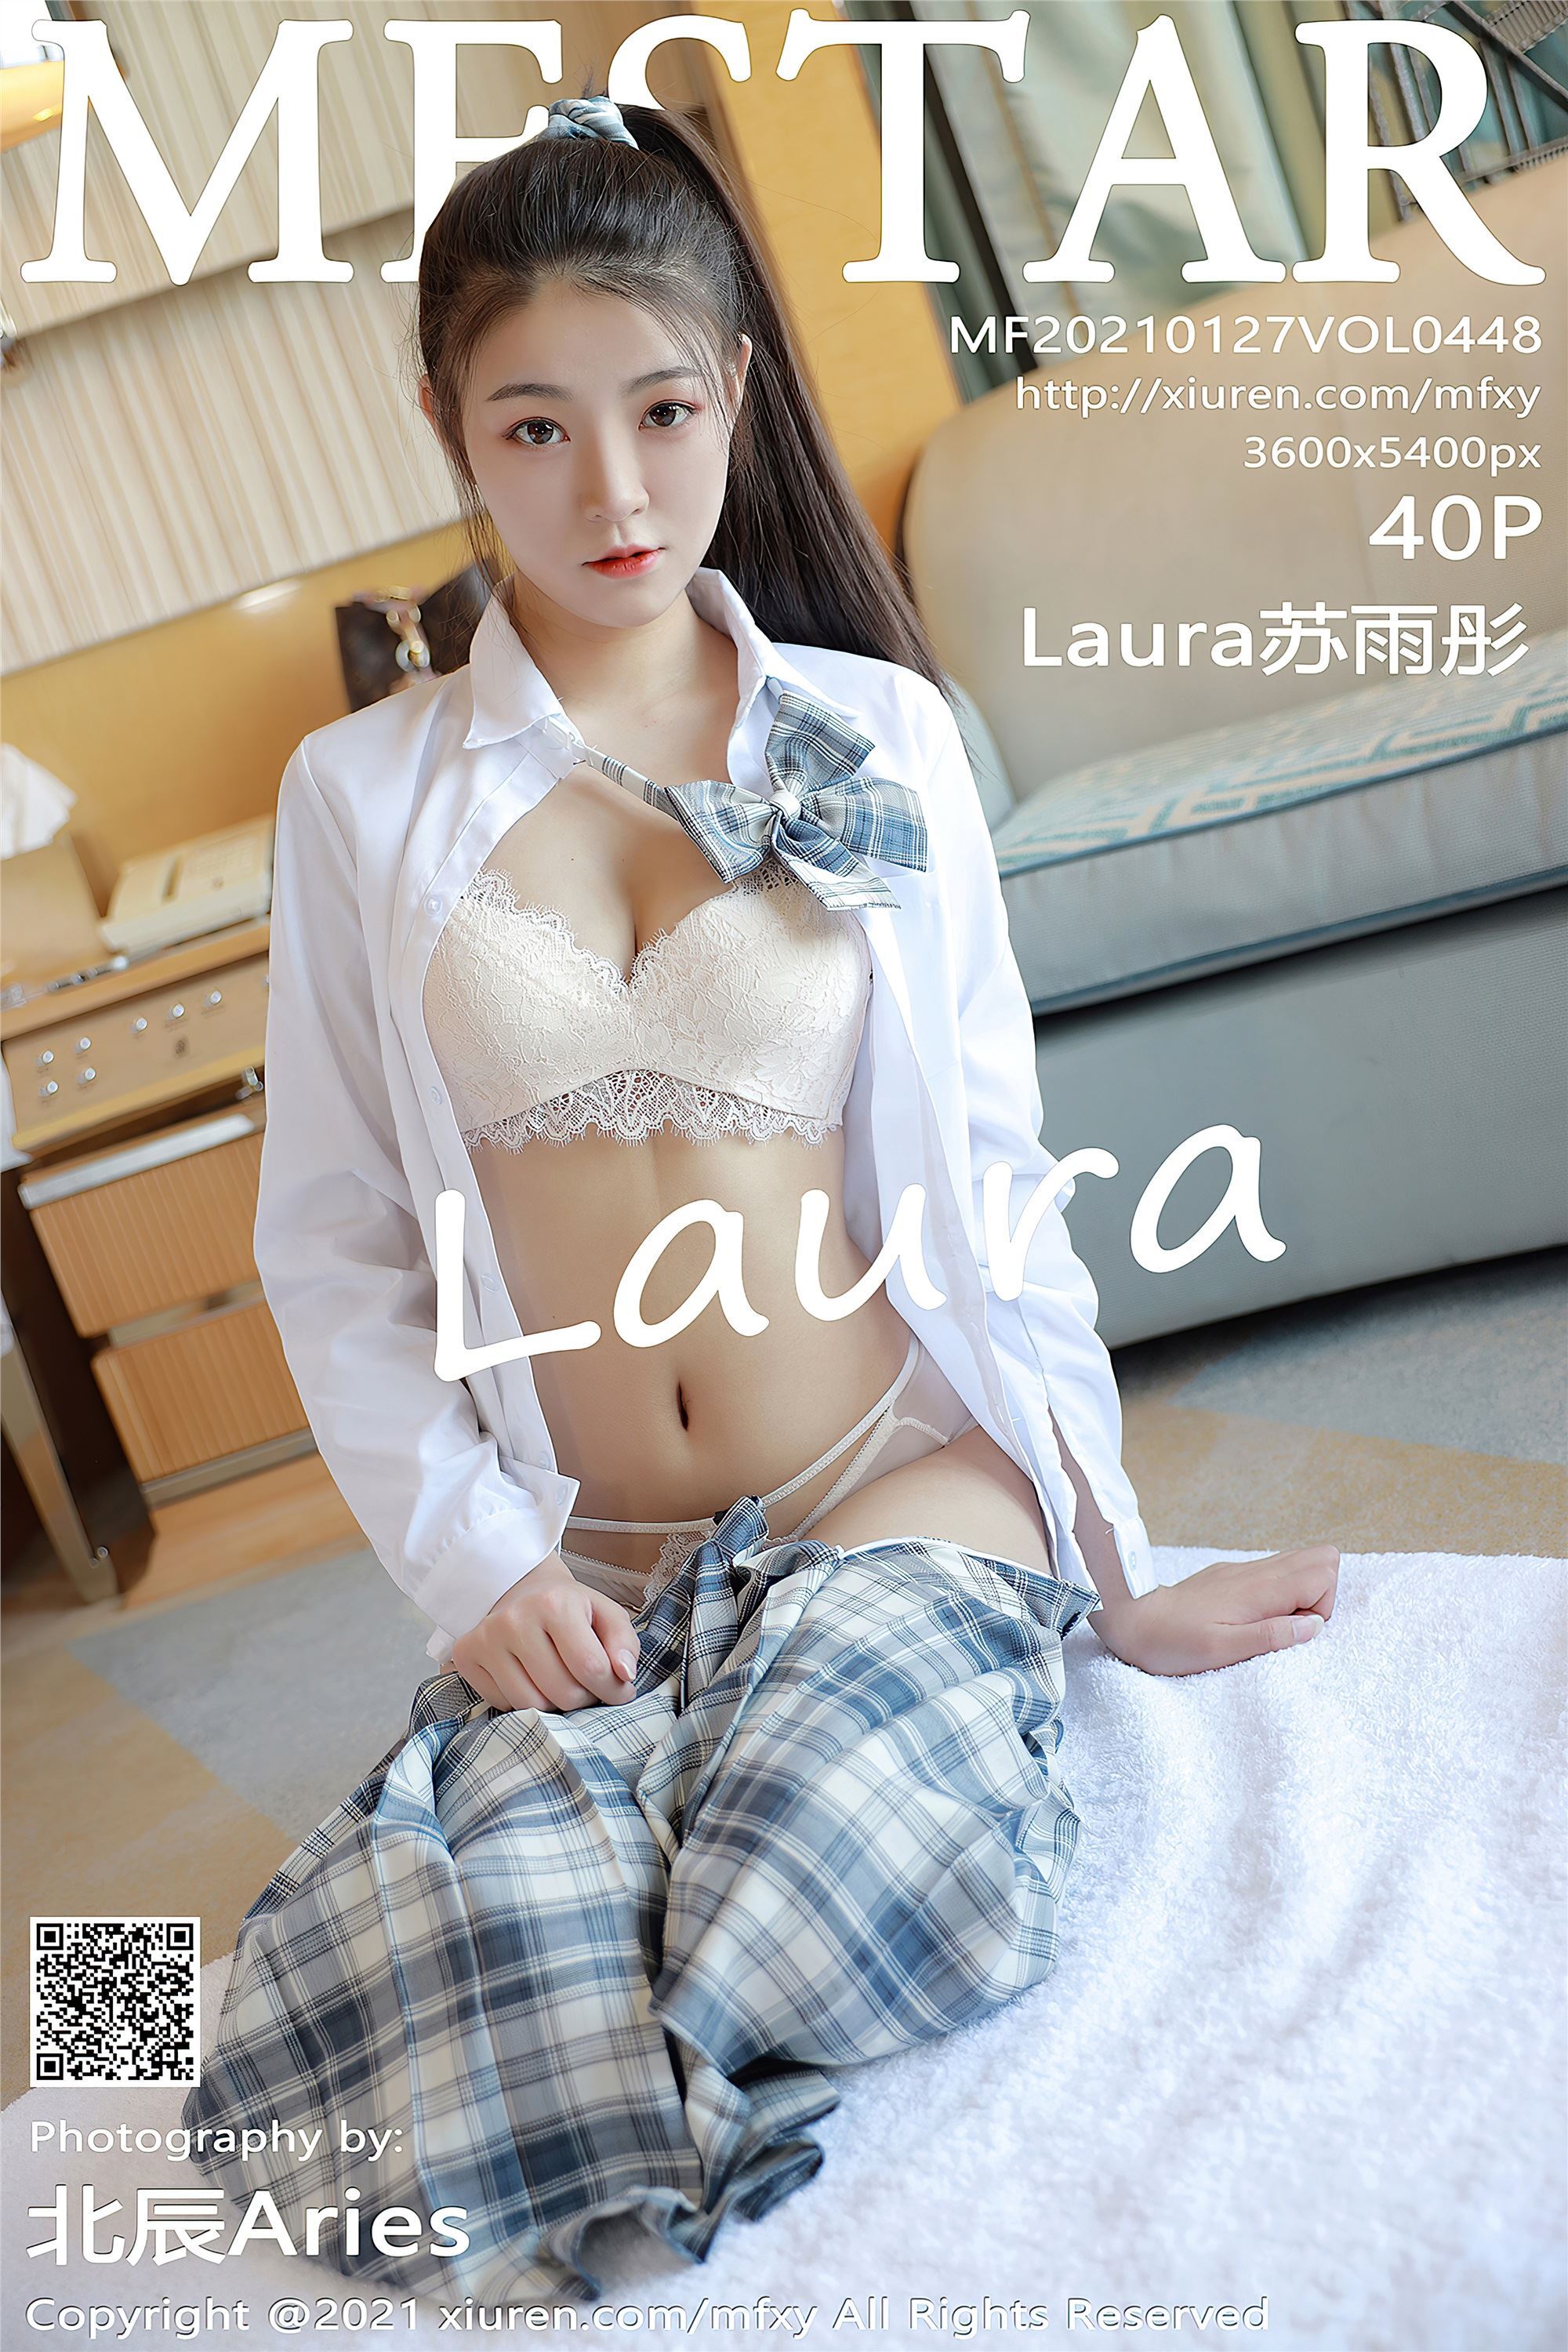 Mfstar model college 2021.01.27 vol.448 Laura Su Yutong